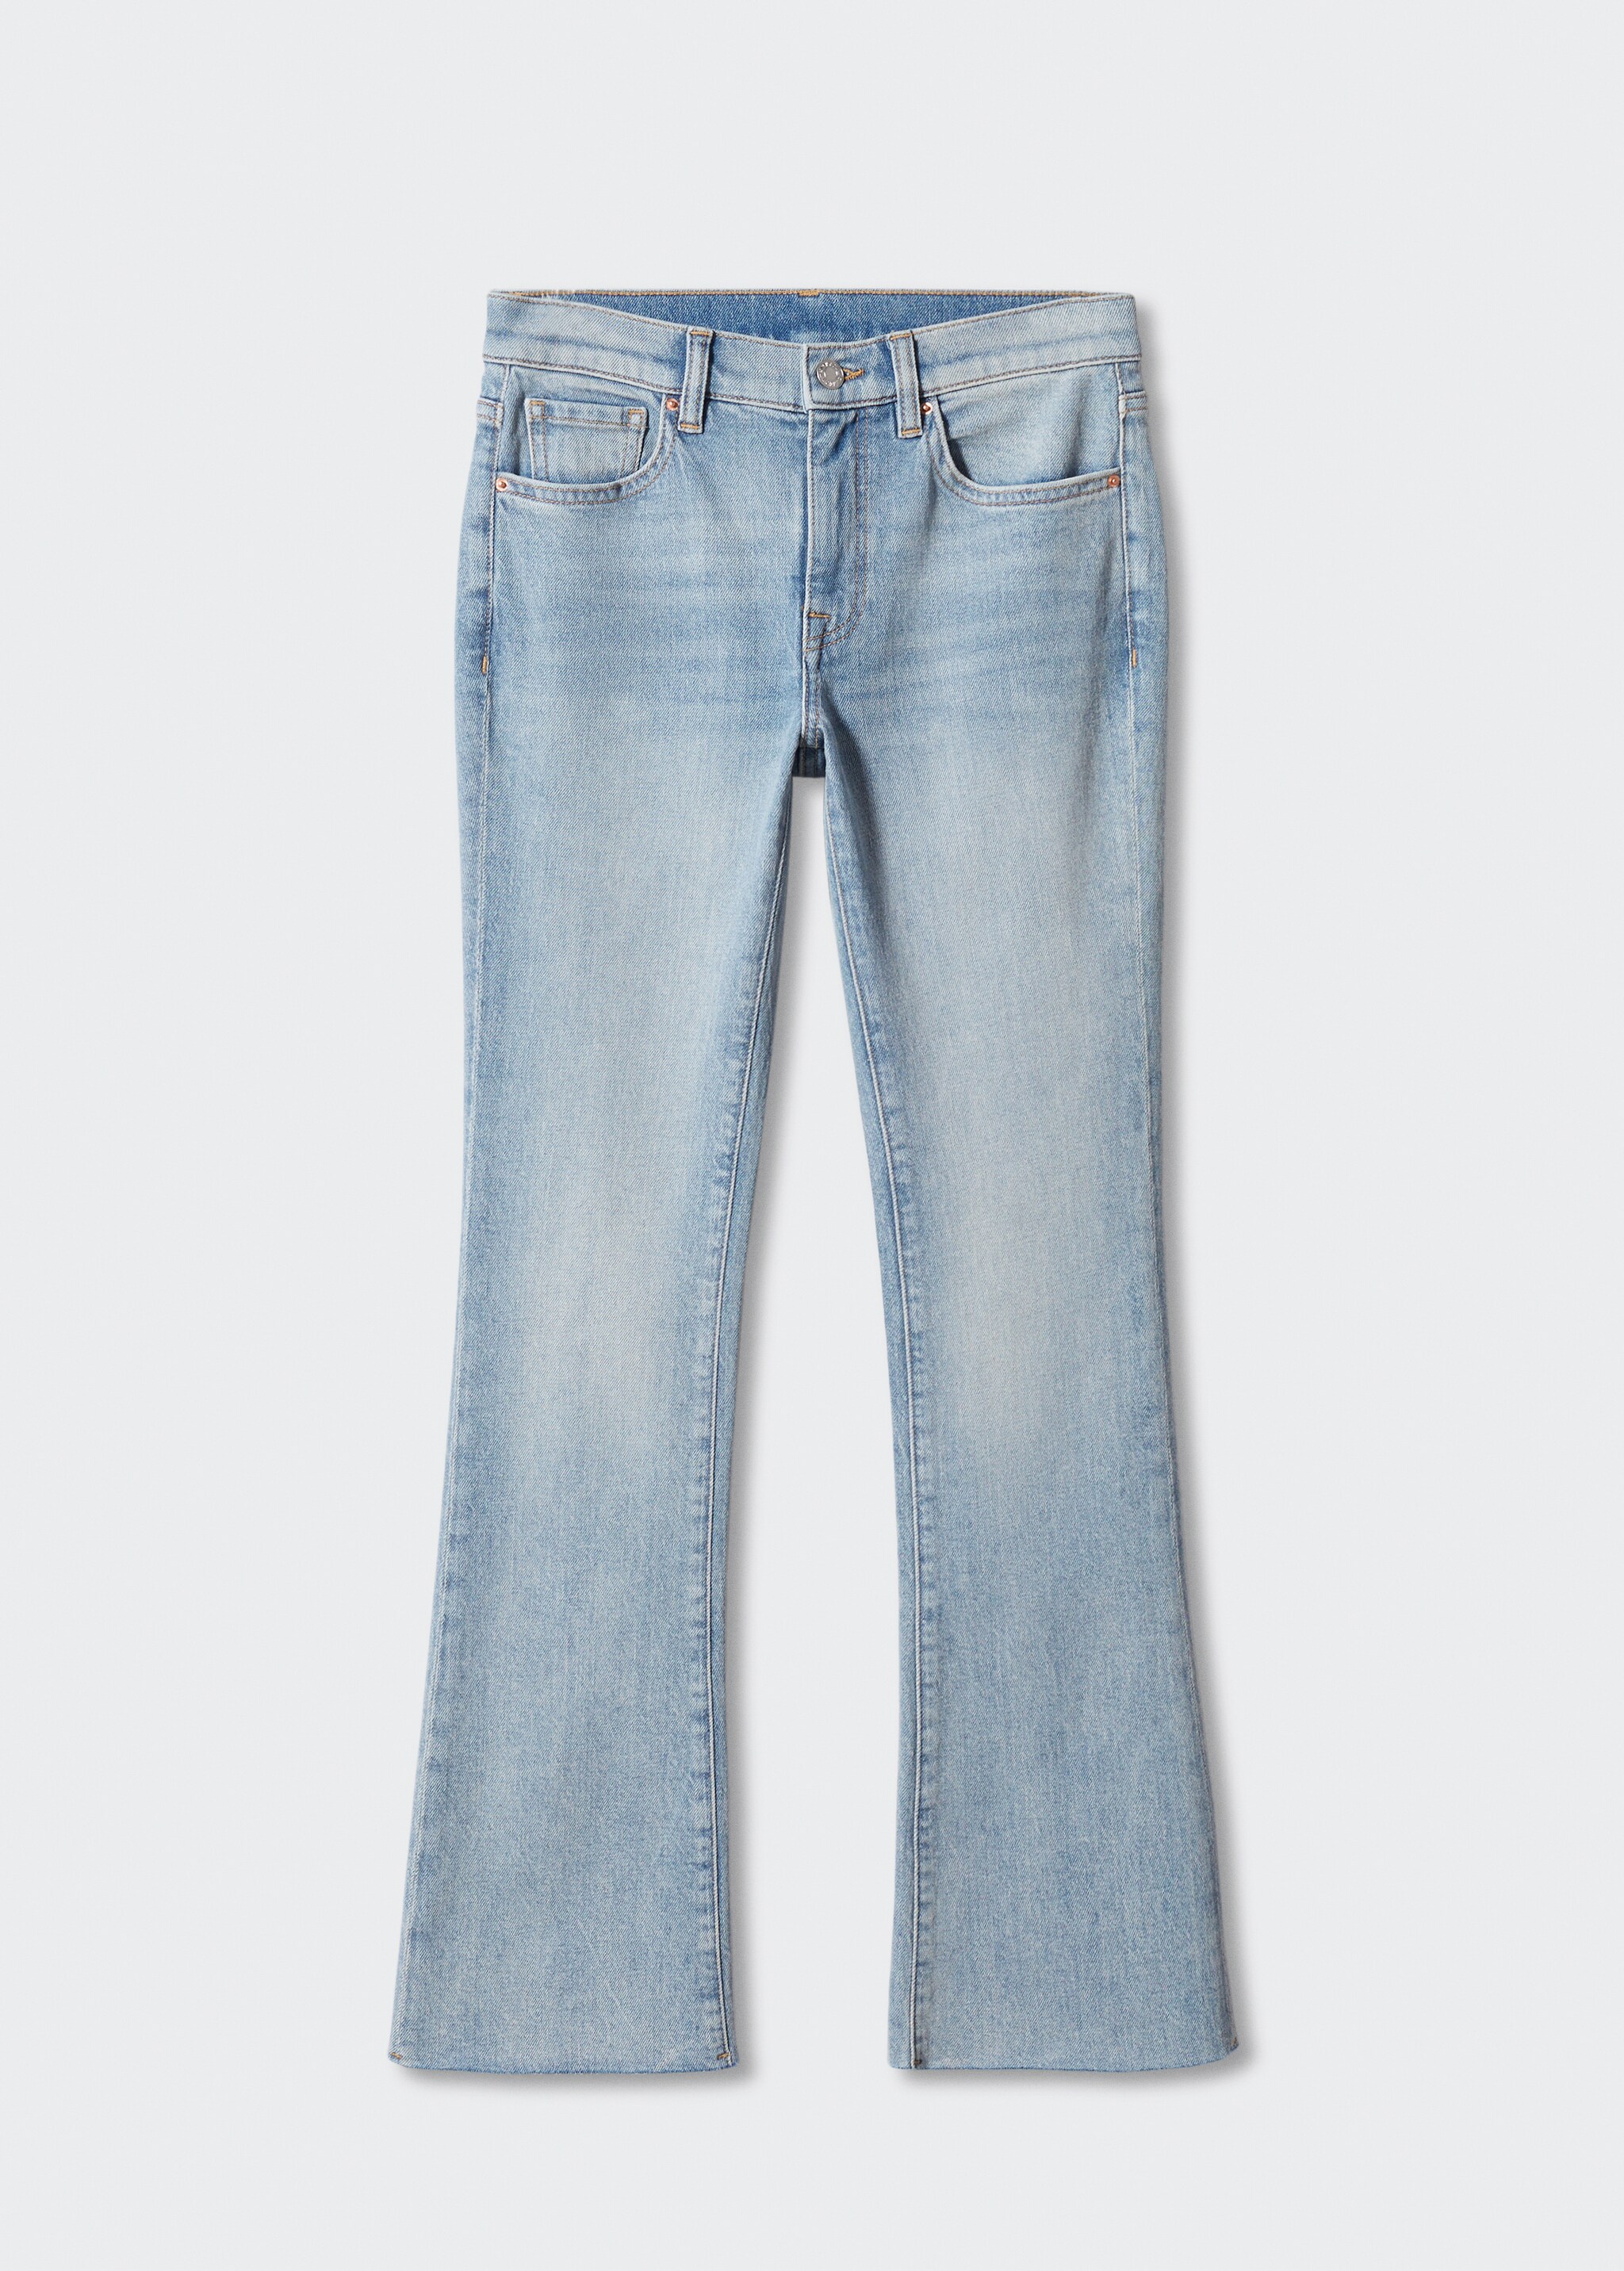 Jeans flare tiro bajo - Artículo sin modelo